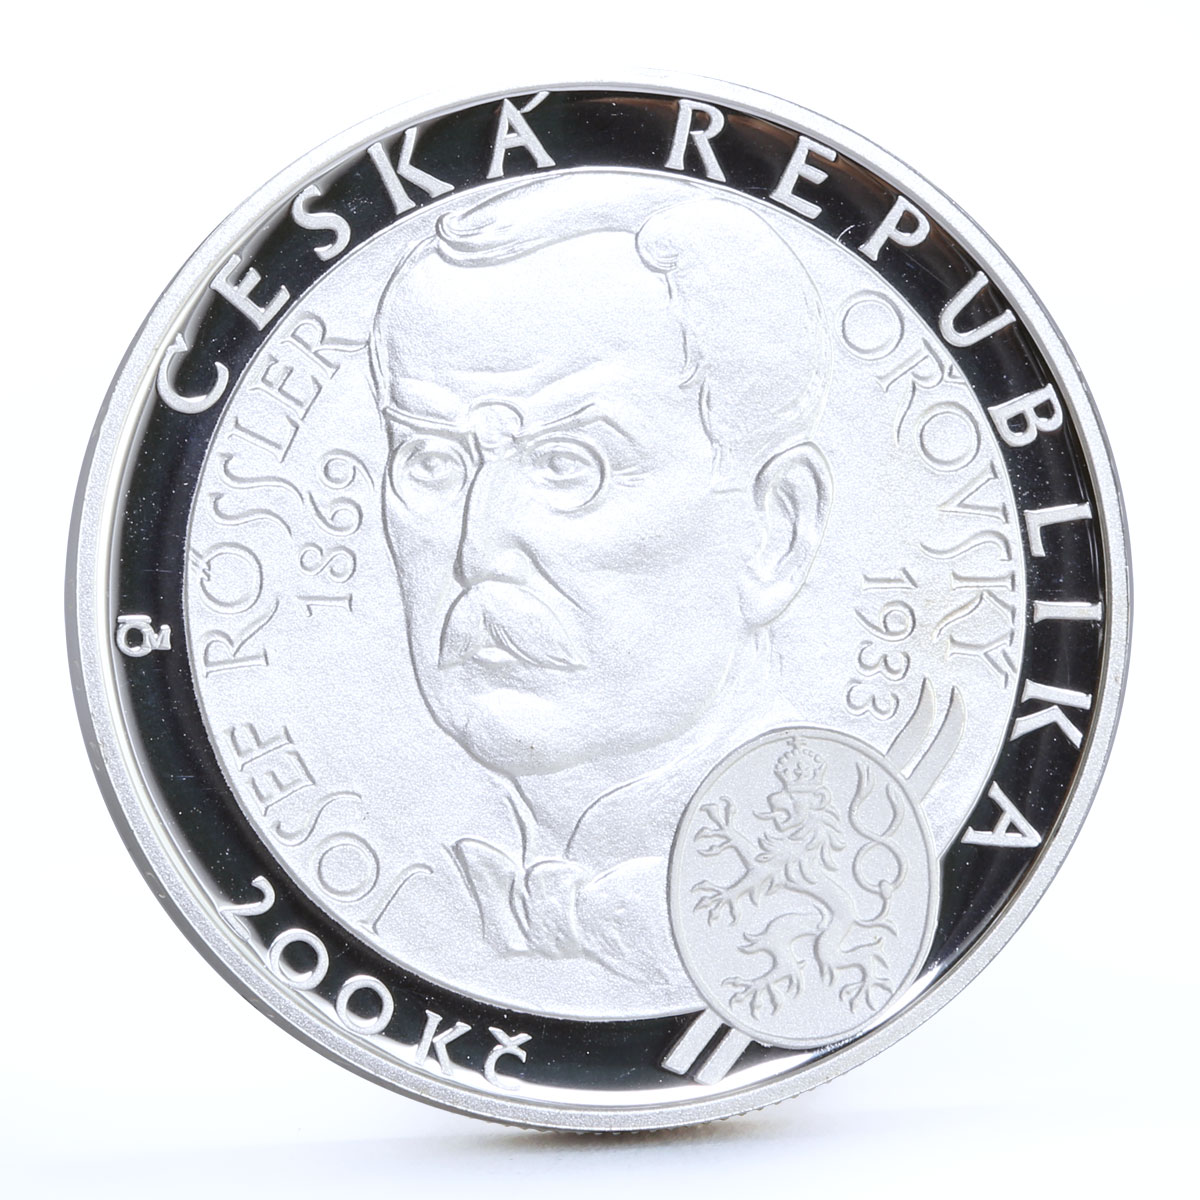 Czech Republic 200 korun National Olympic Ski Union Skier proof silver coin 2003